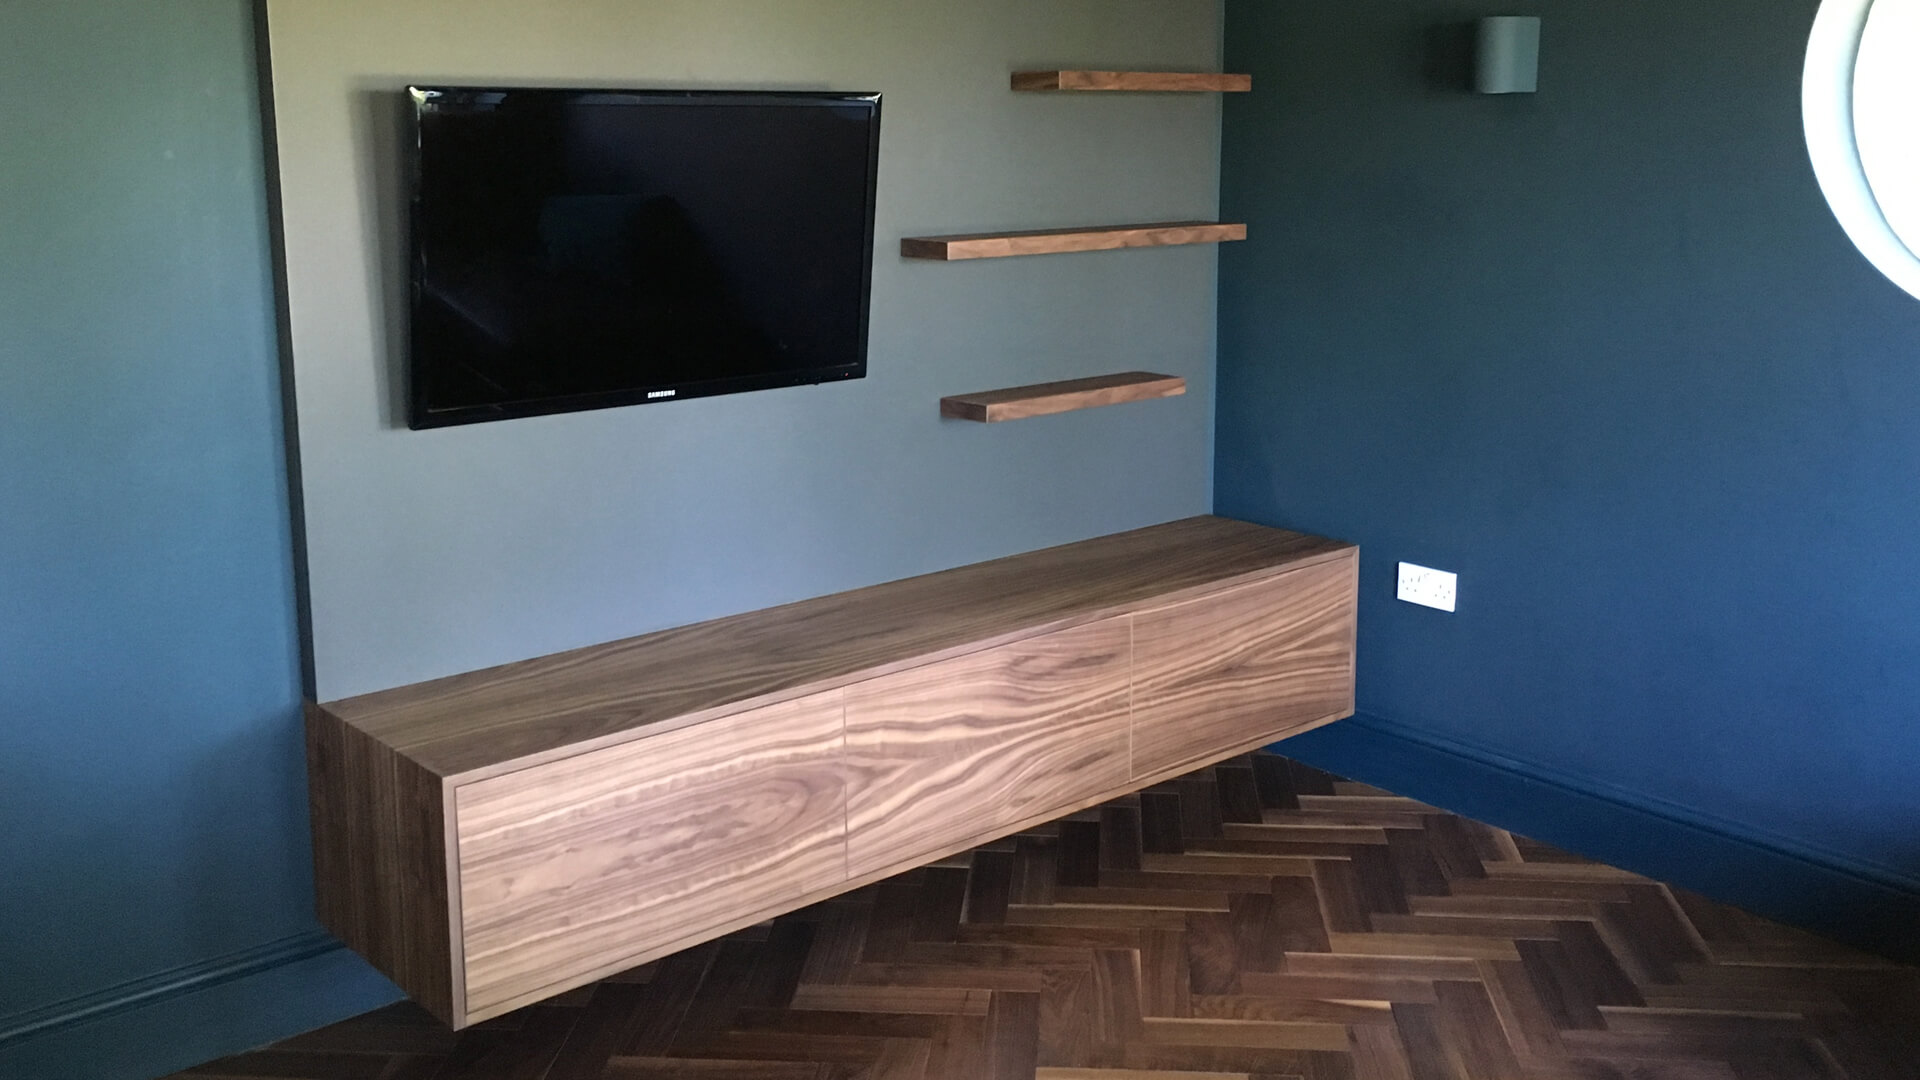 Bespoke Wooden Furniture Media Wall With Walnut Av Cabinet